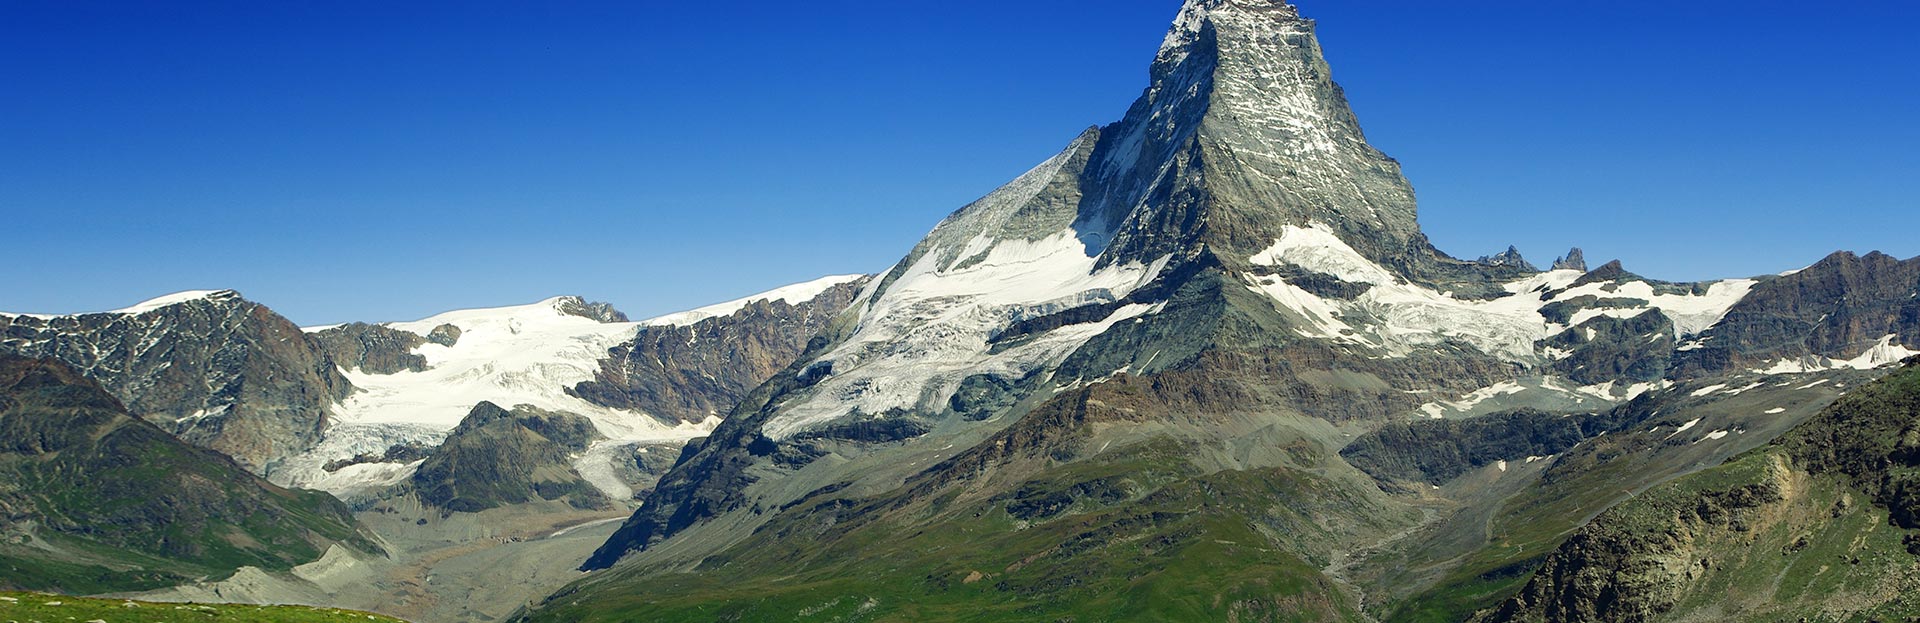 Italy Matterhorn